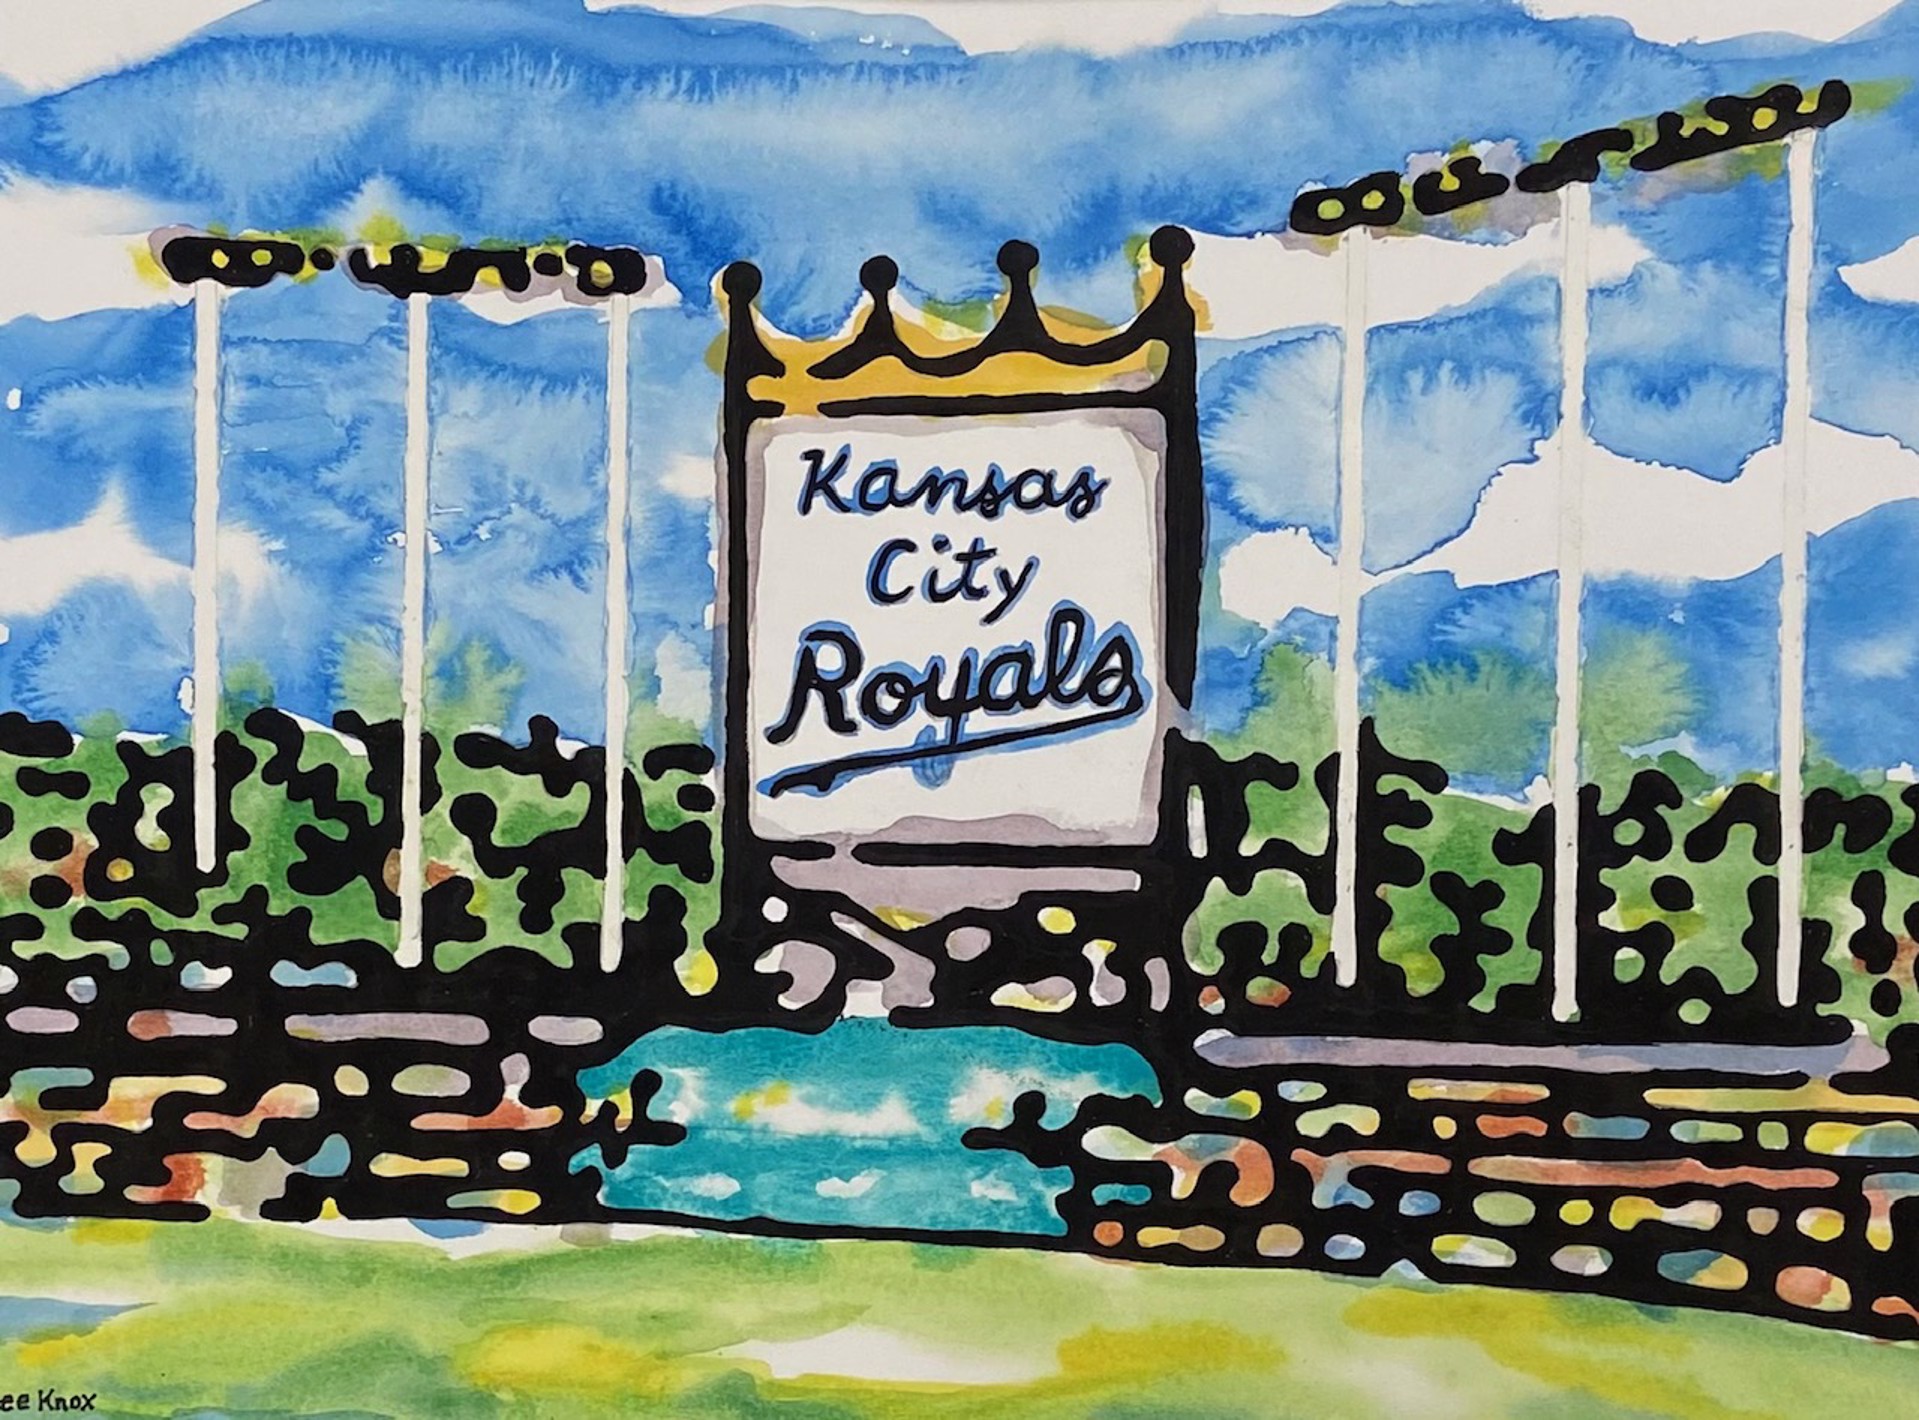 KC Royals by Lee Knox